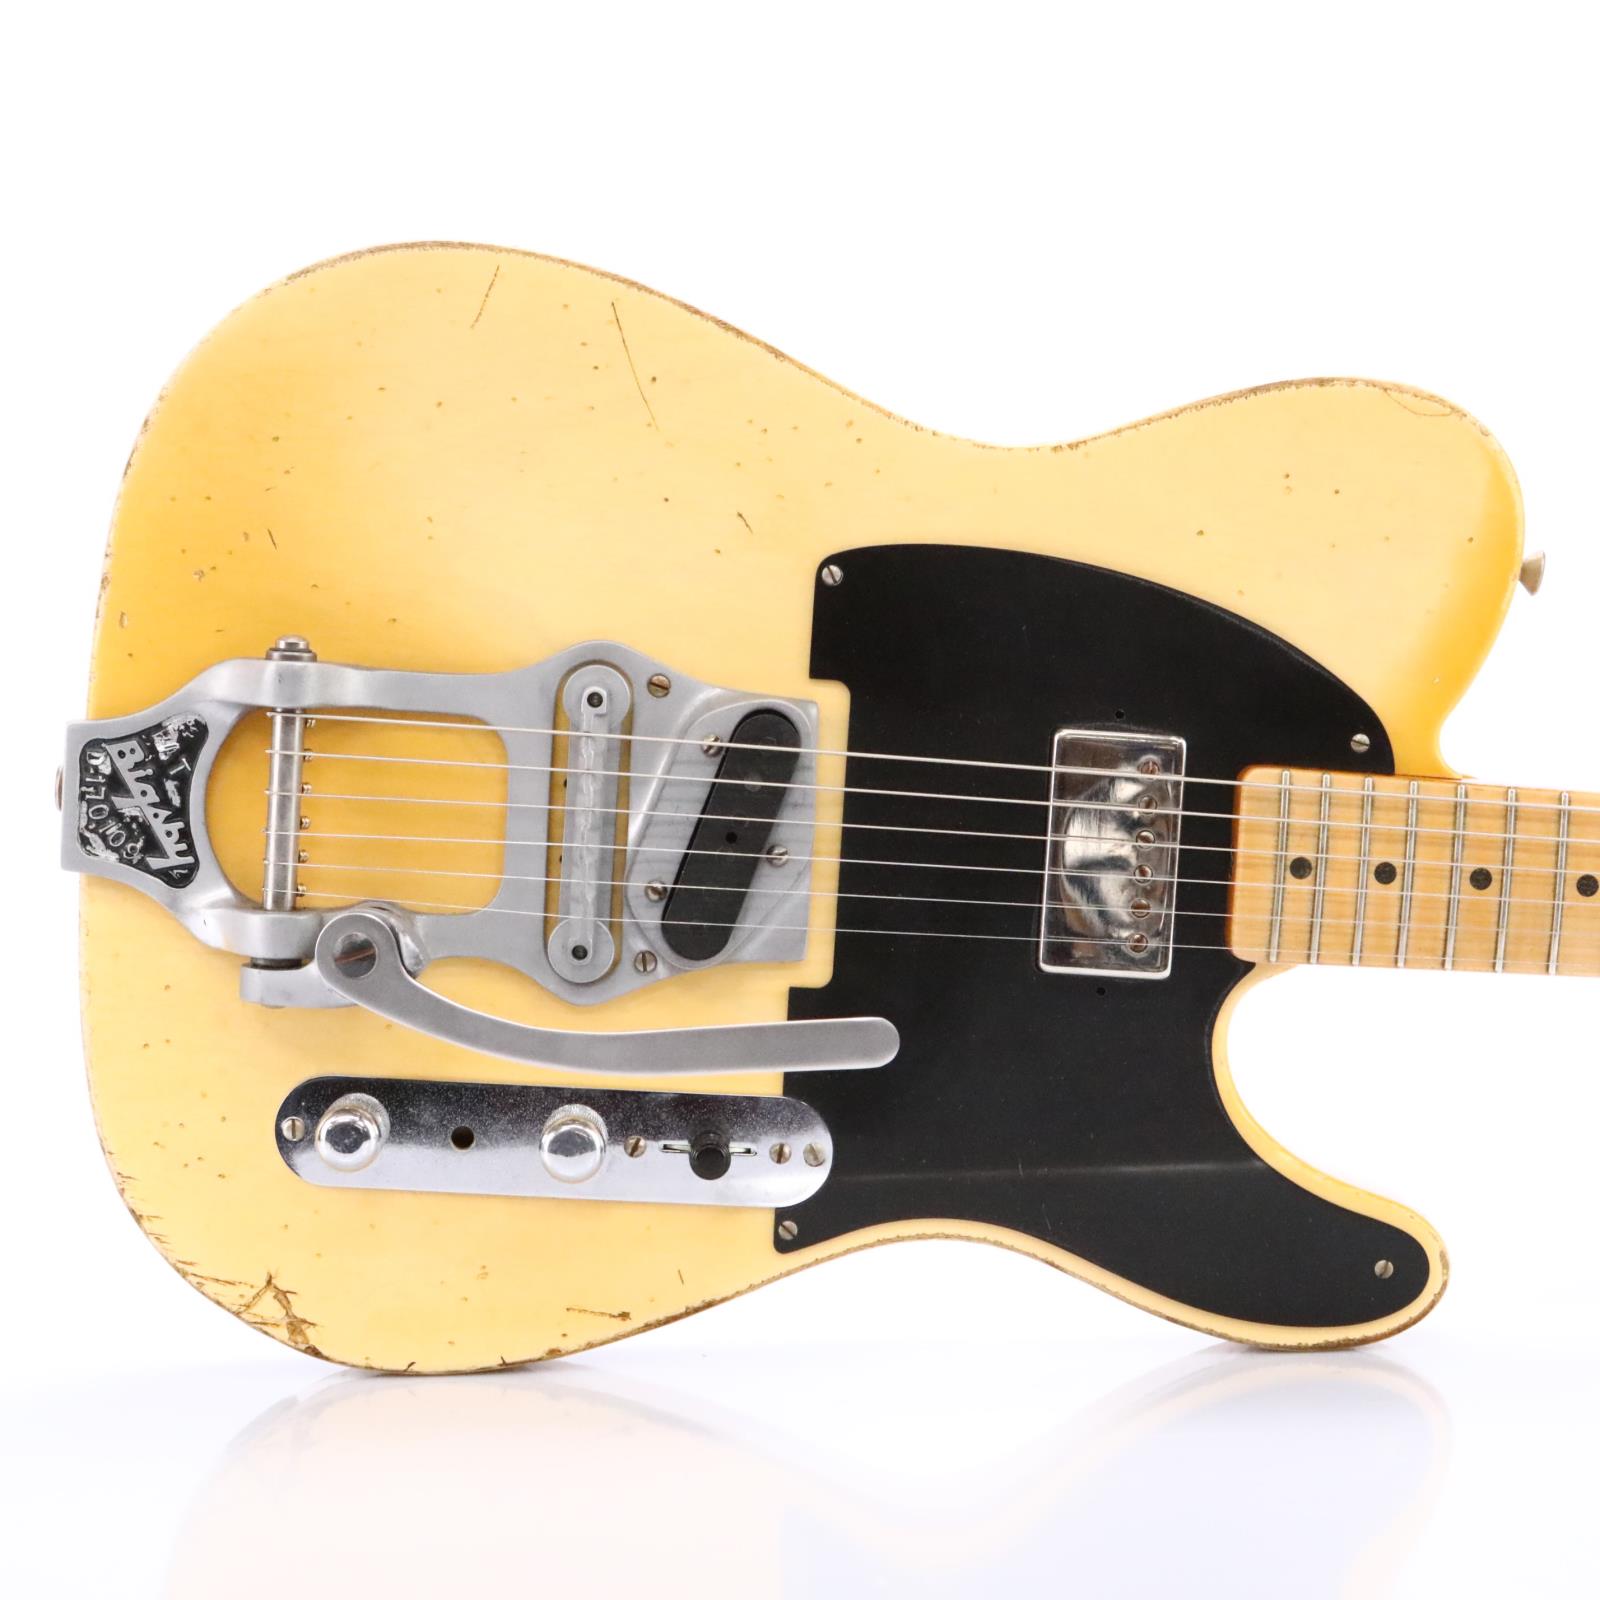 2017 Fender Custom Shop Bob Bain "Son of a Gunn" Telecaster Masterbuilt #50687